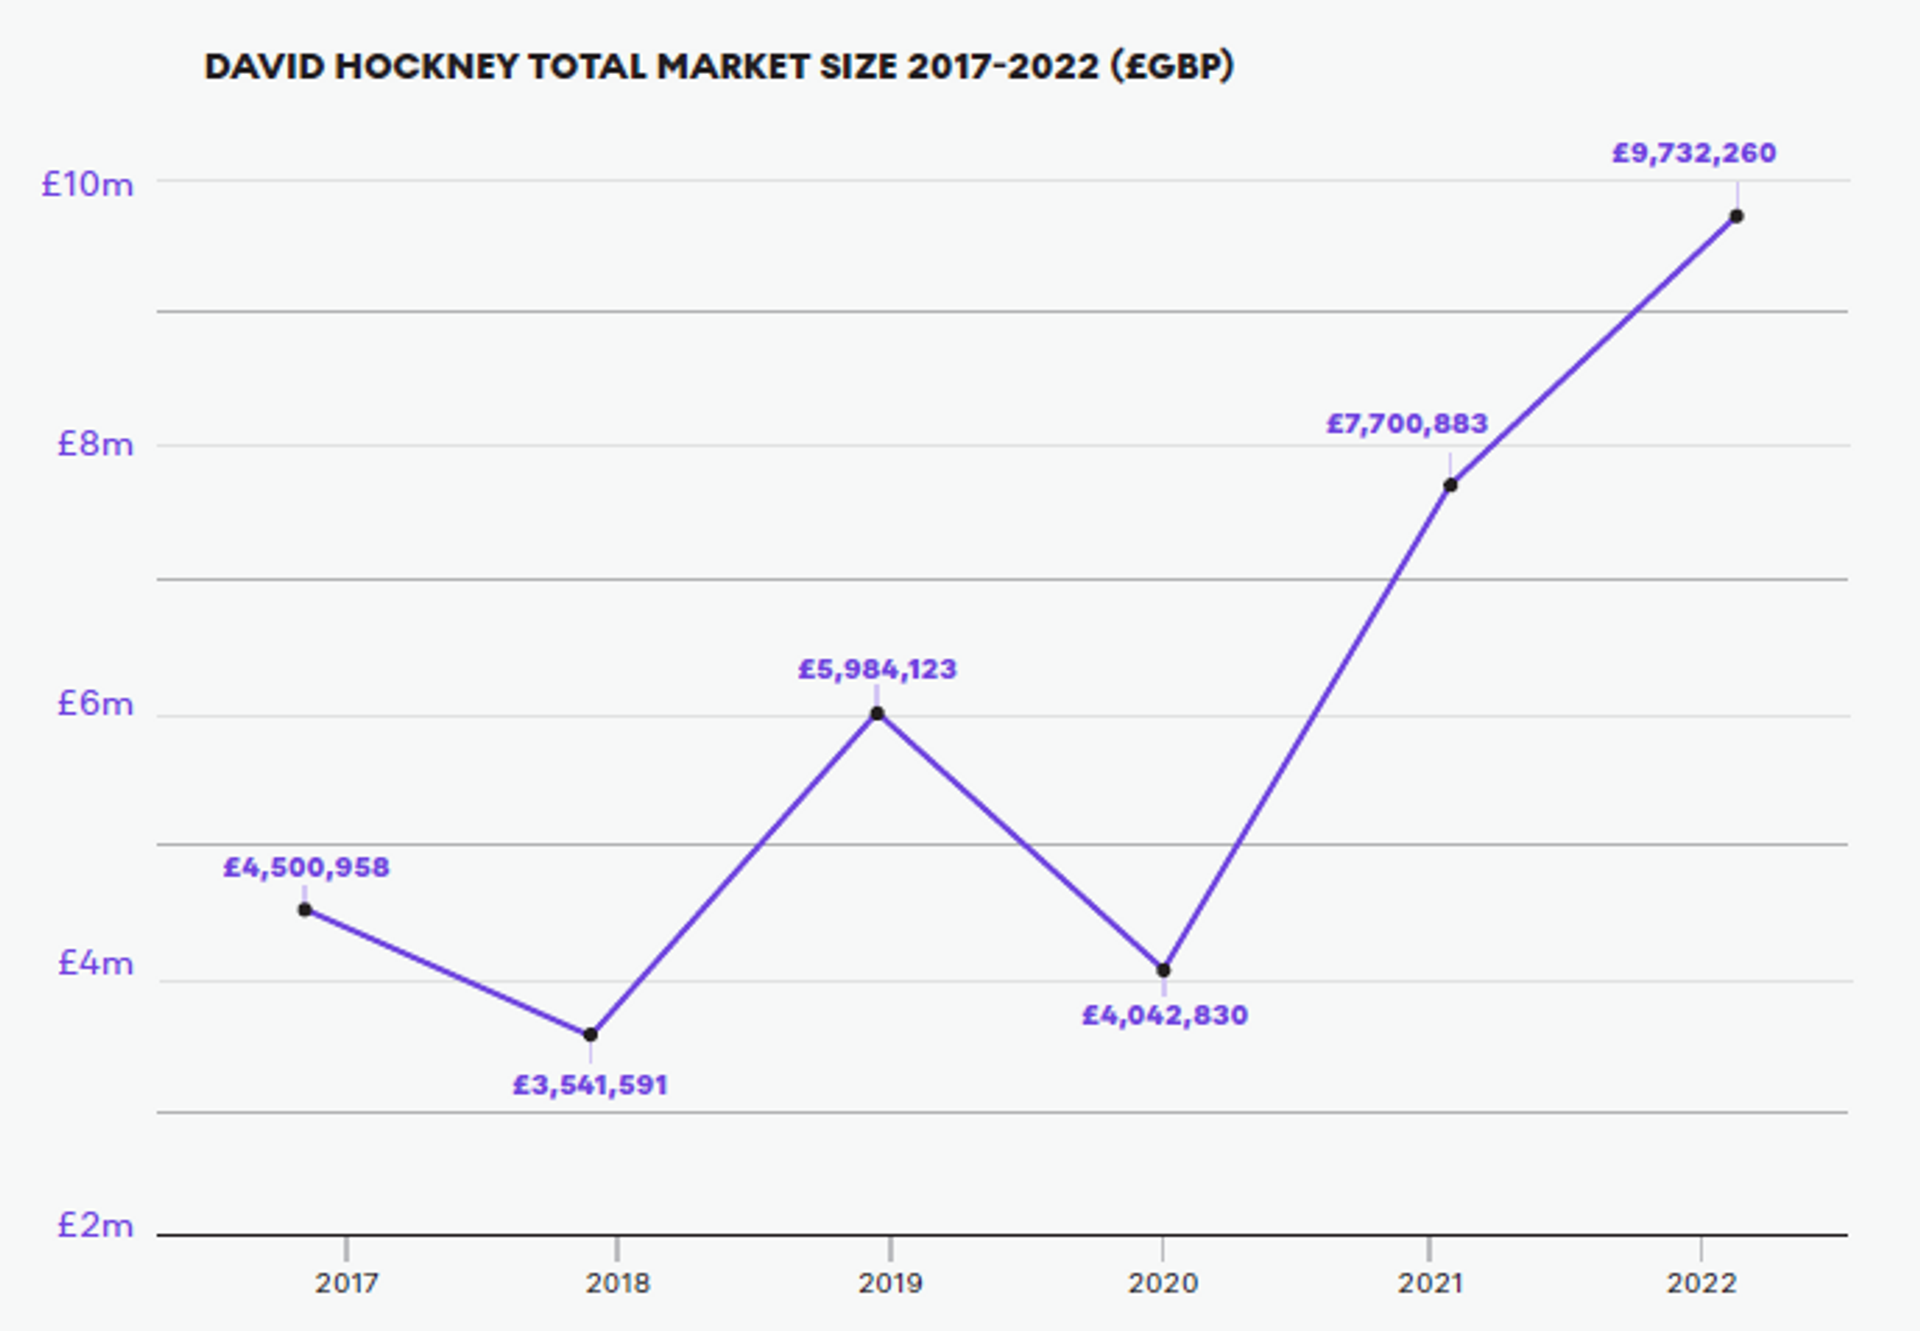 David Hockney’s Total Market Size 2017-2022 – MyArtBroker